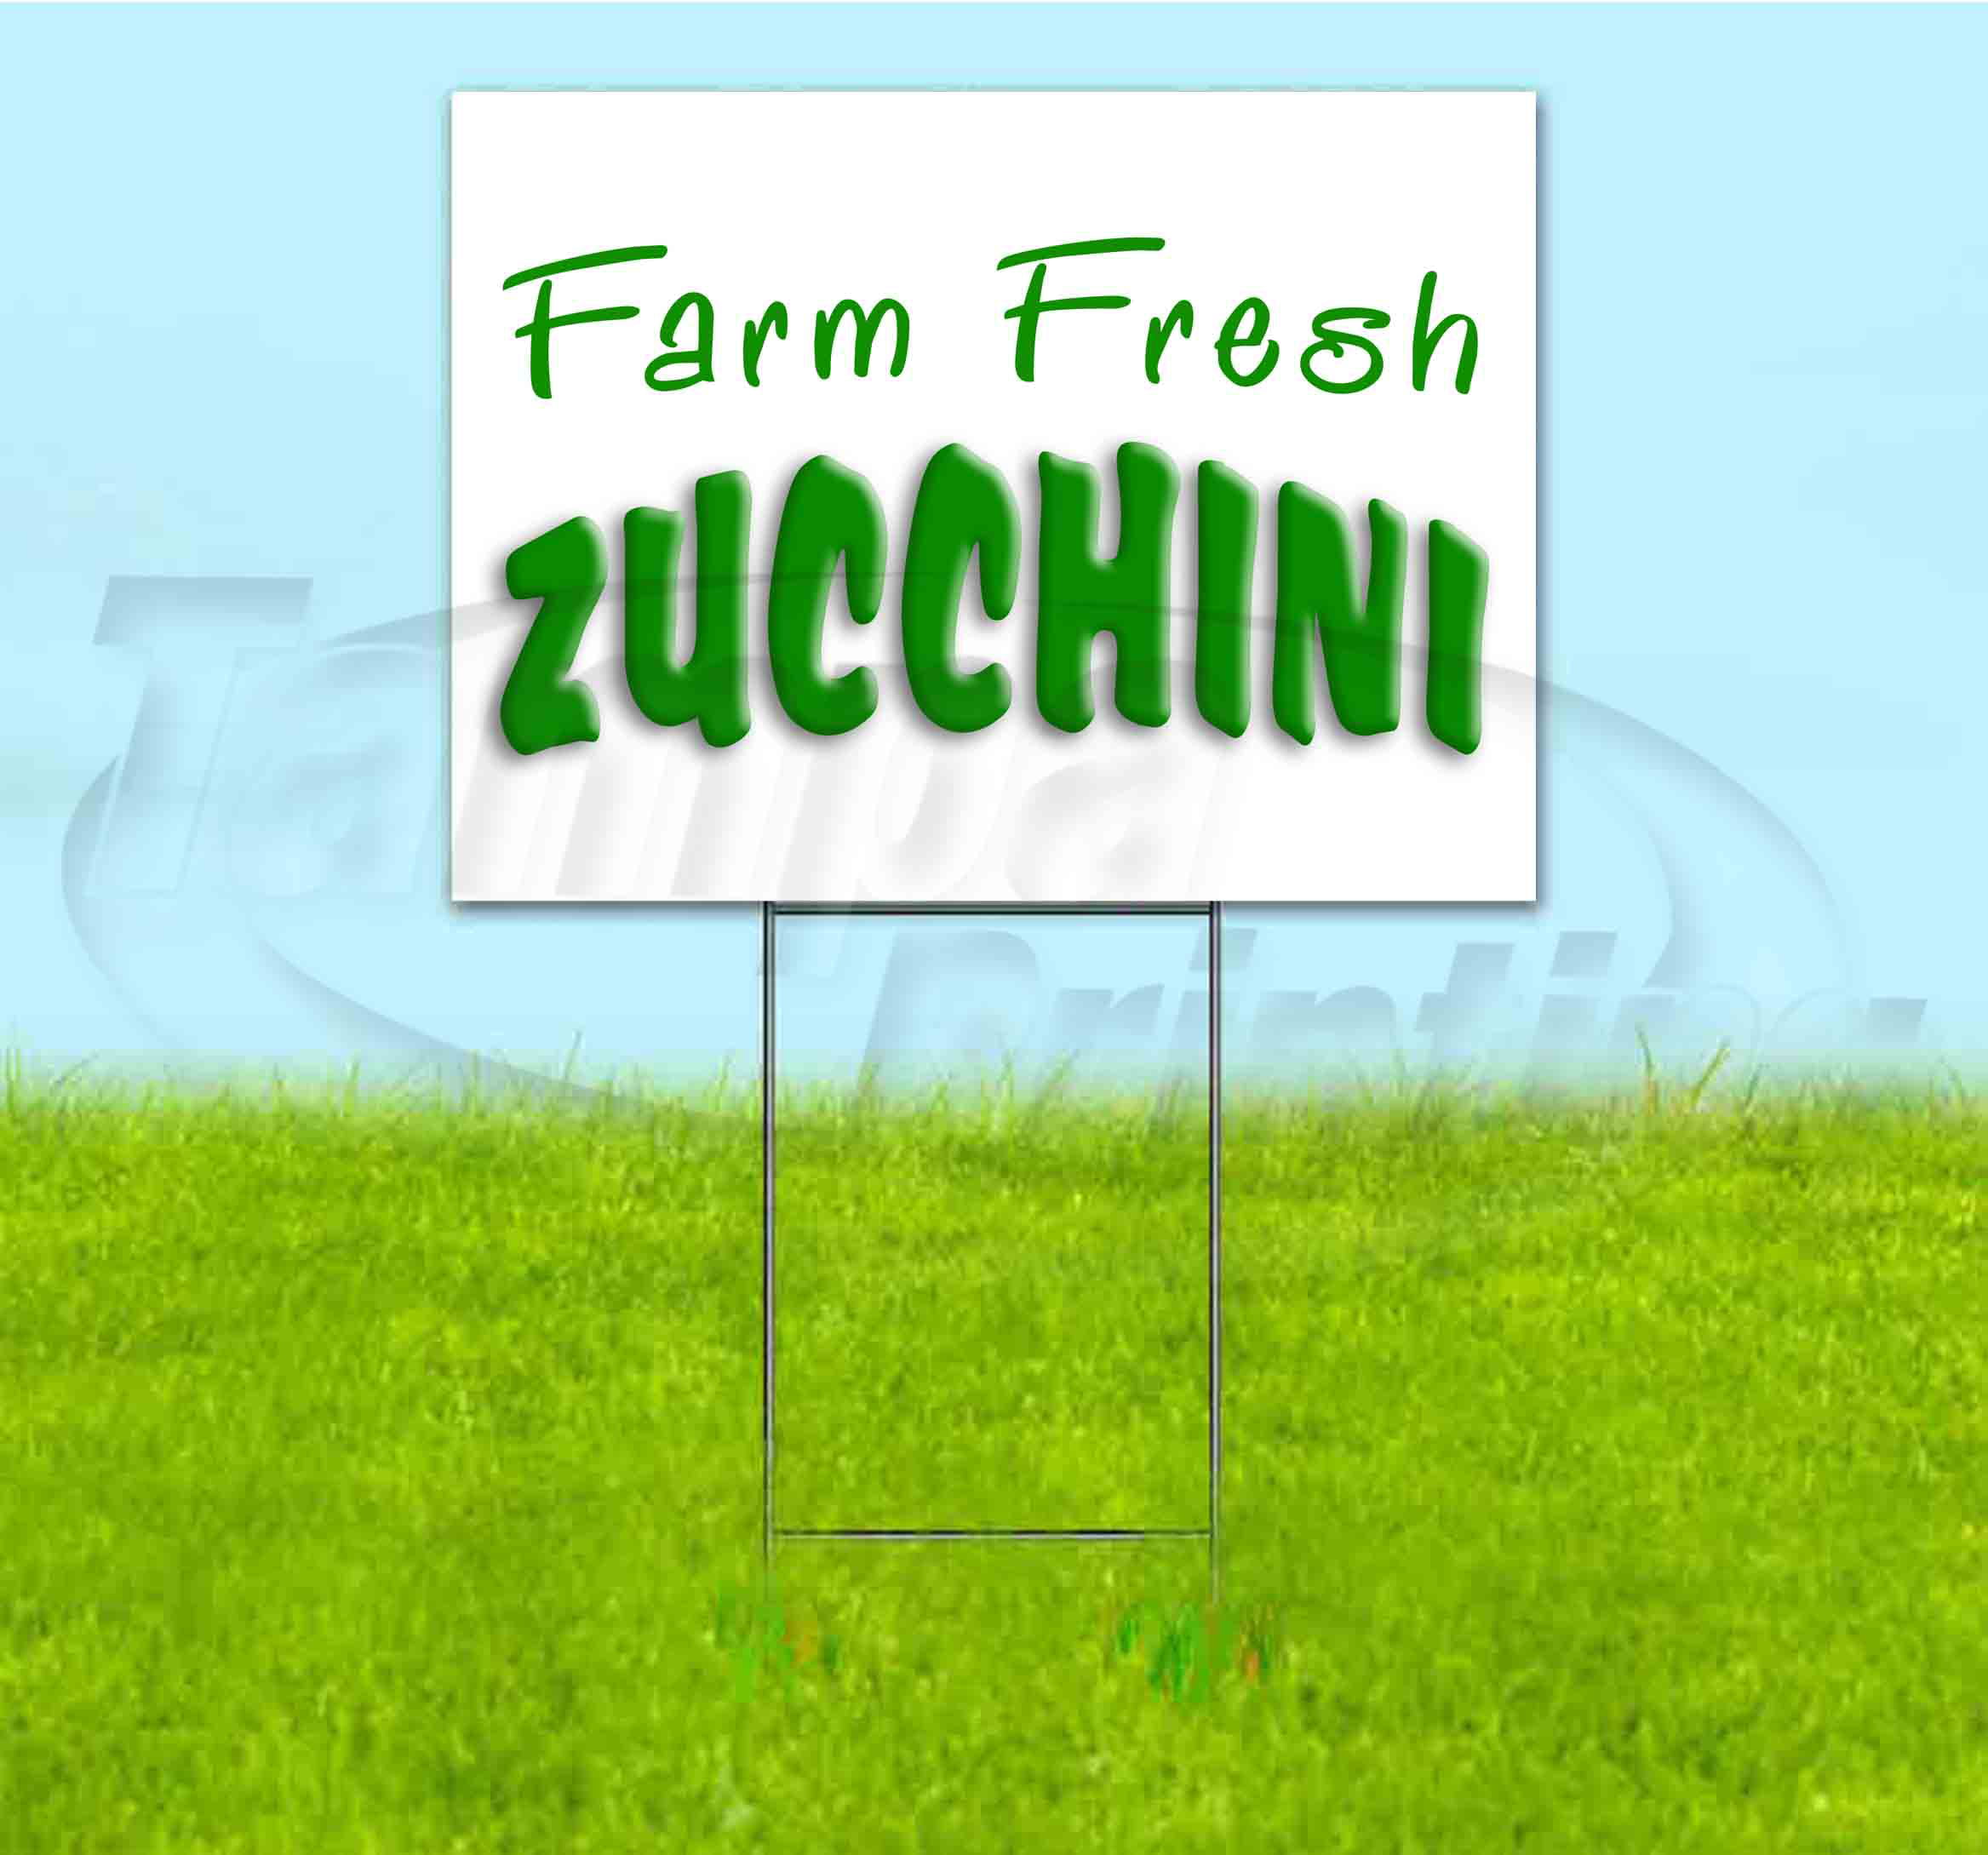 Lawn Bandit Farm Fresh Produce Decorations USA Corrugated Plastic Yard Sign Advertising 18x24 New